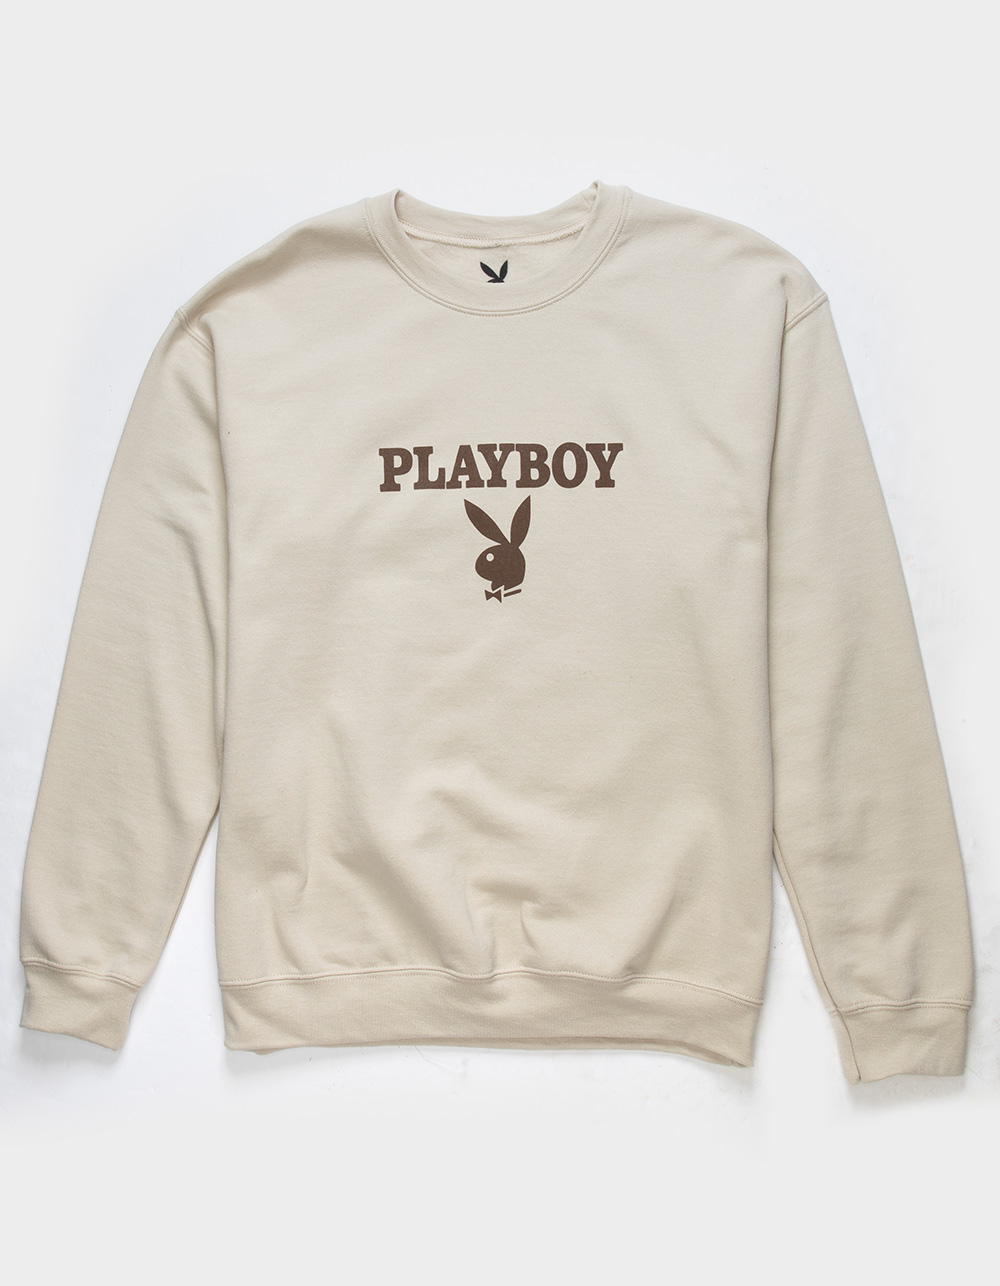 PLAYBOY Crew Fleece Logo Mens Sweatshirt